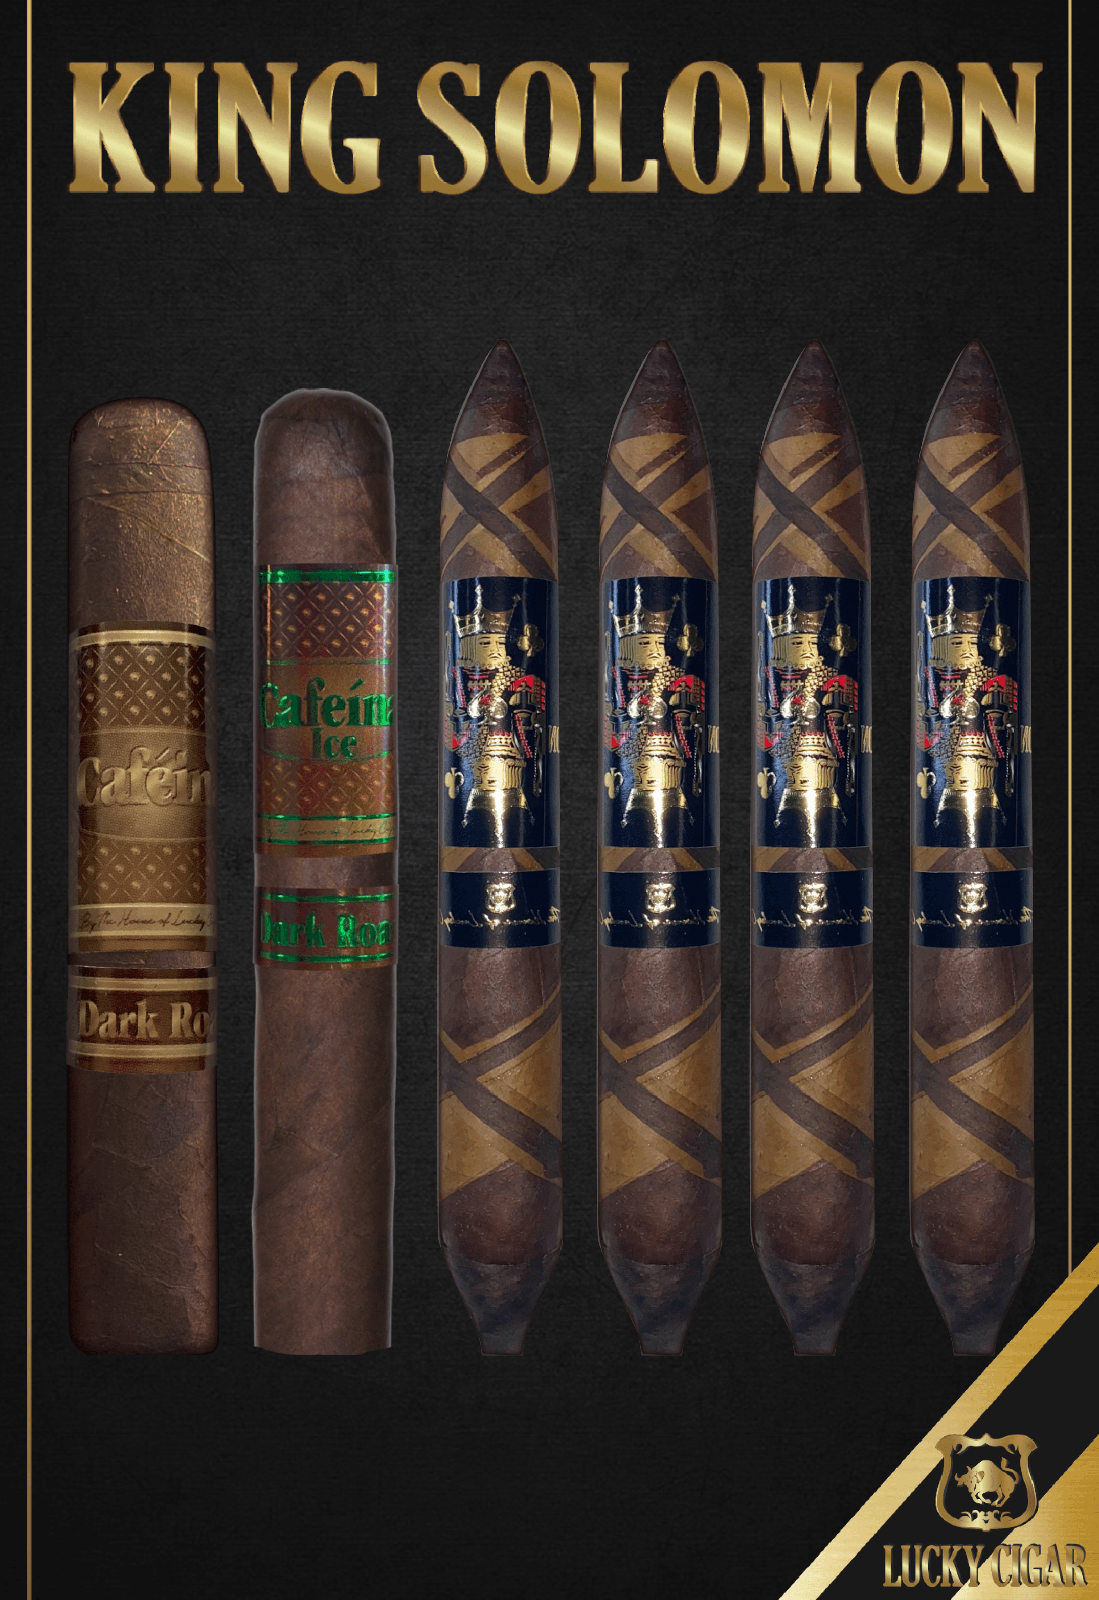 Cigar Gift Sets: Set of 6 Cigars, 2 Cafeina, 4 King Solomon